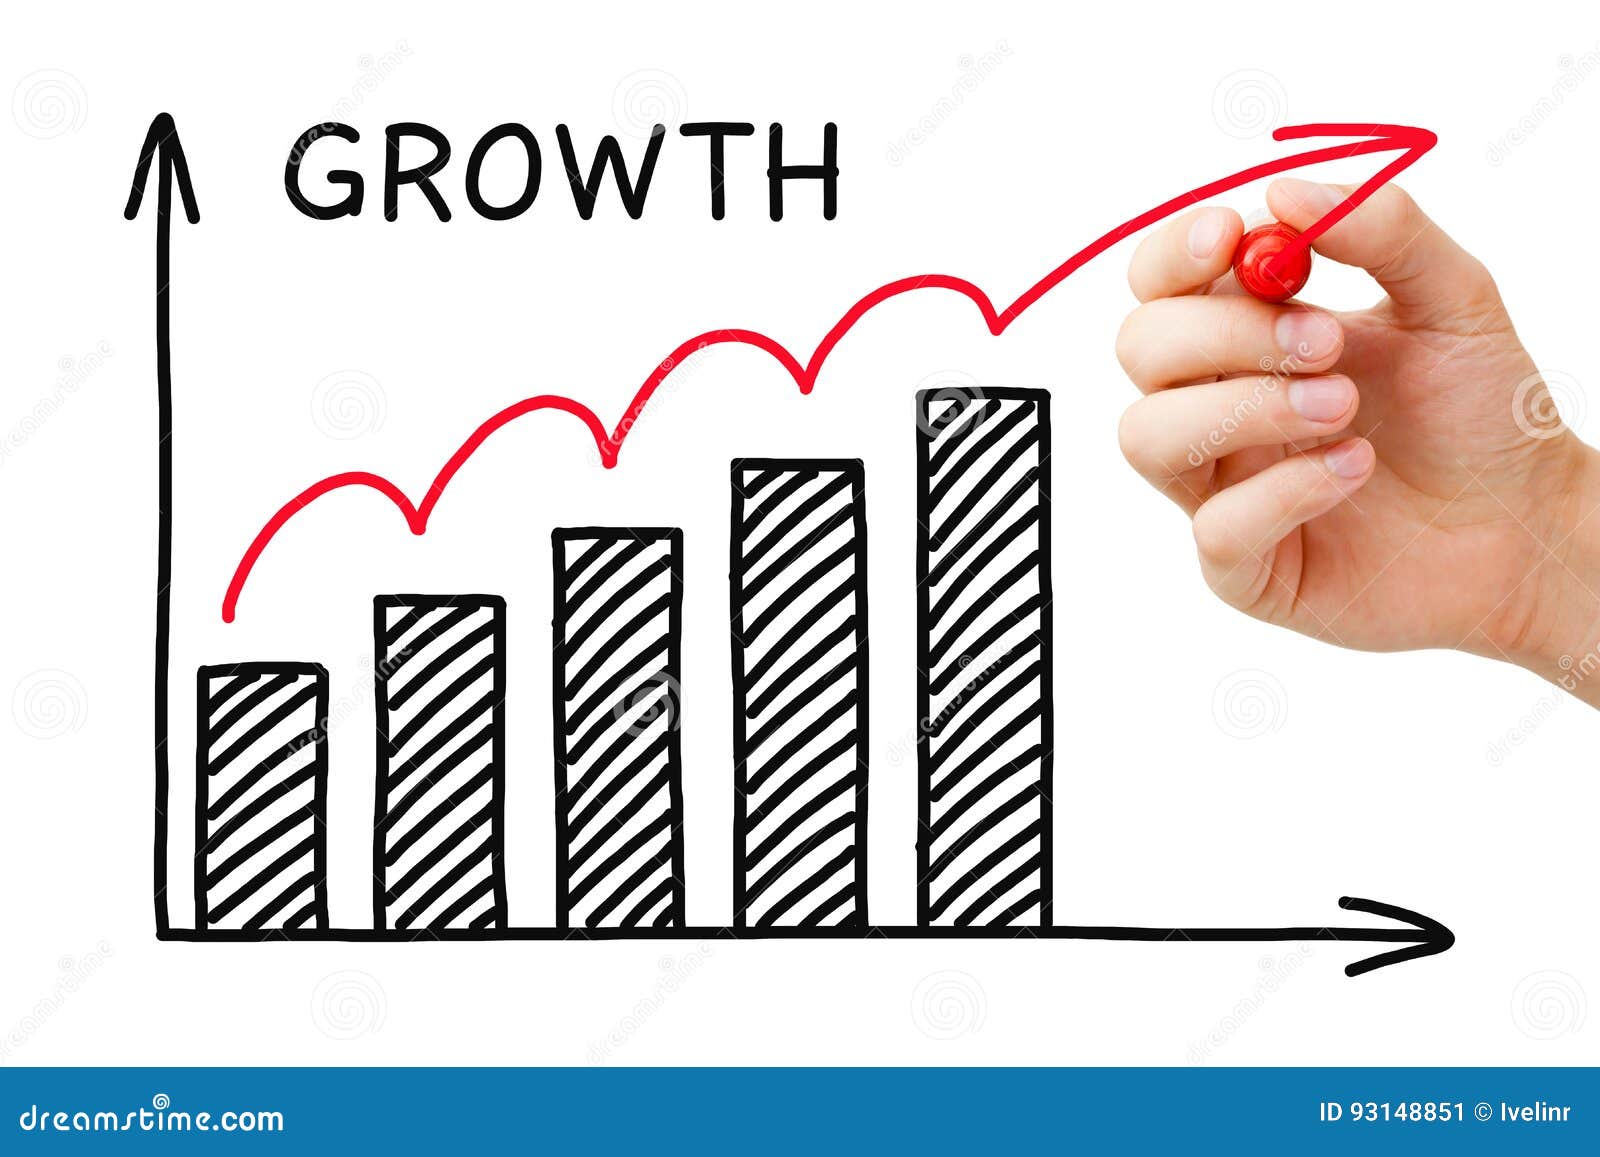 growth graph